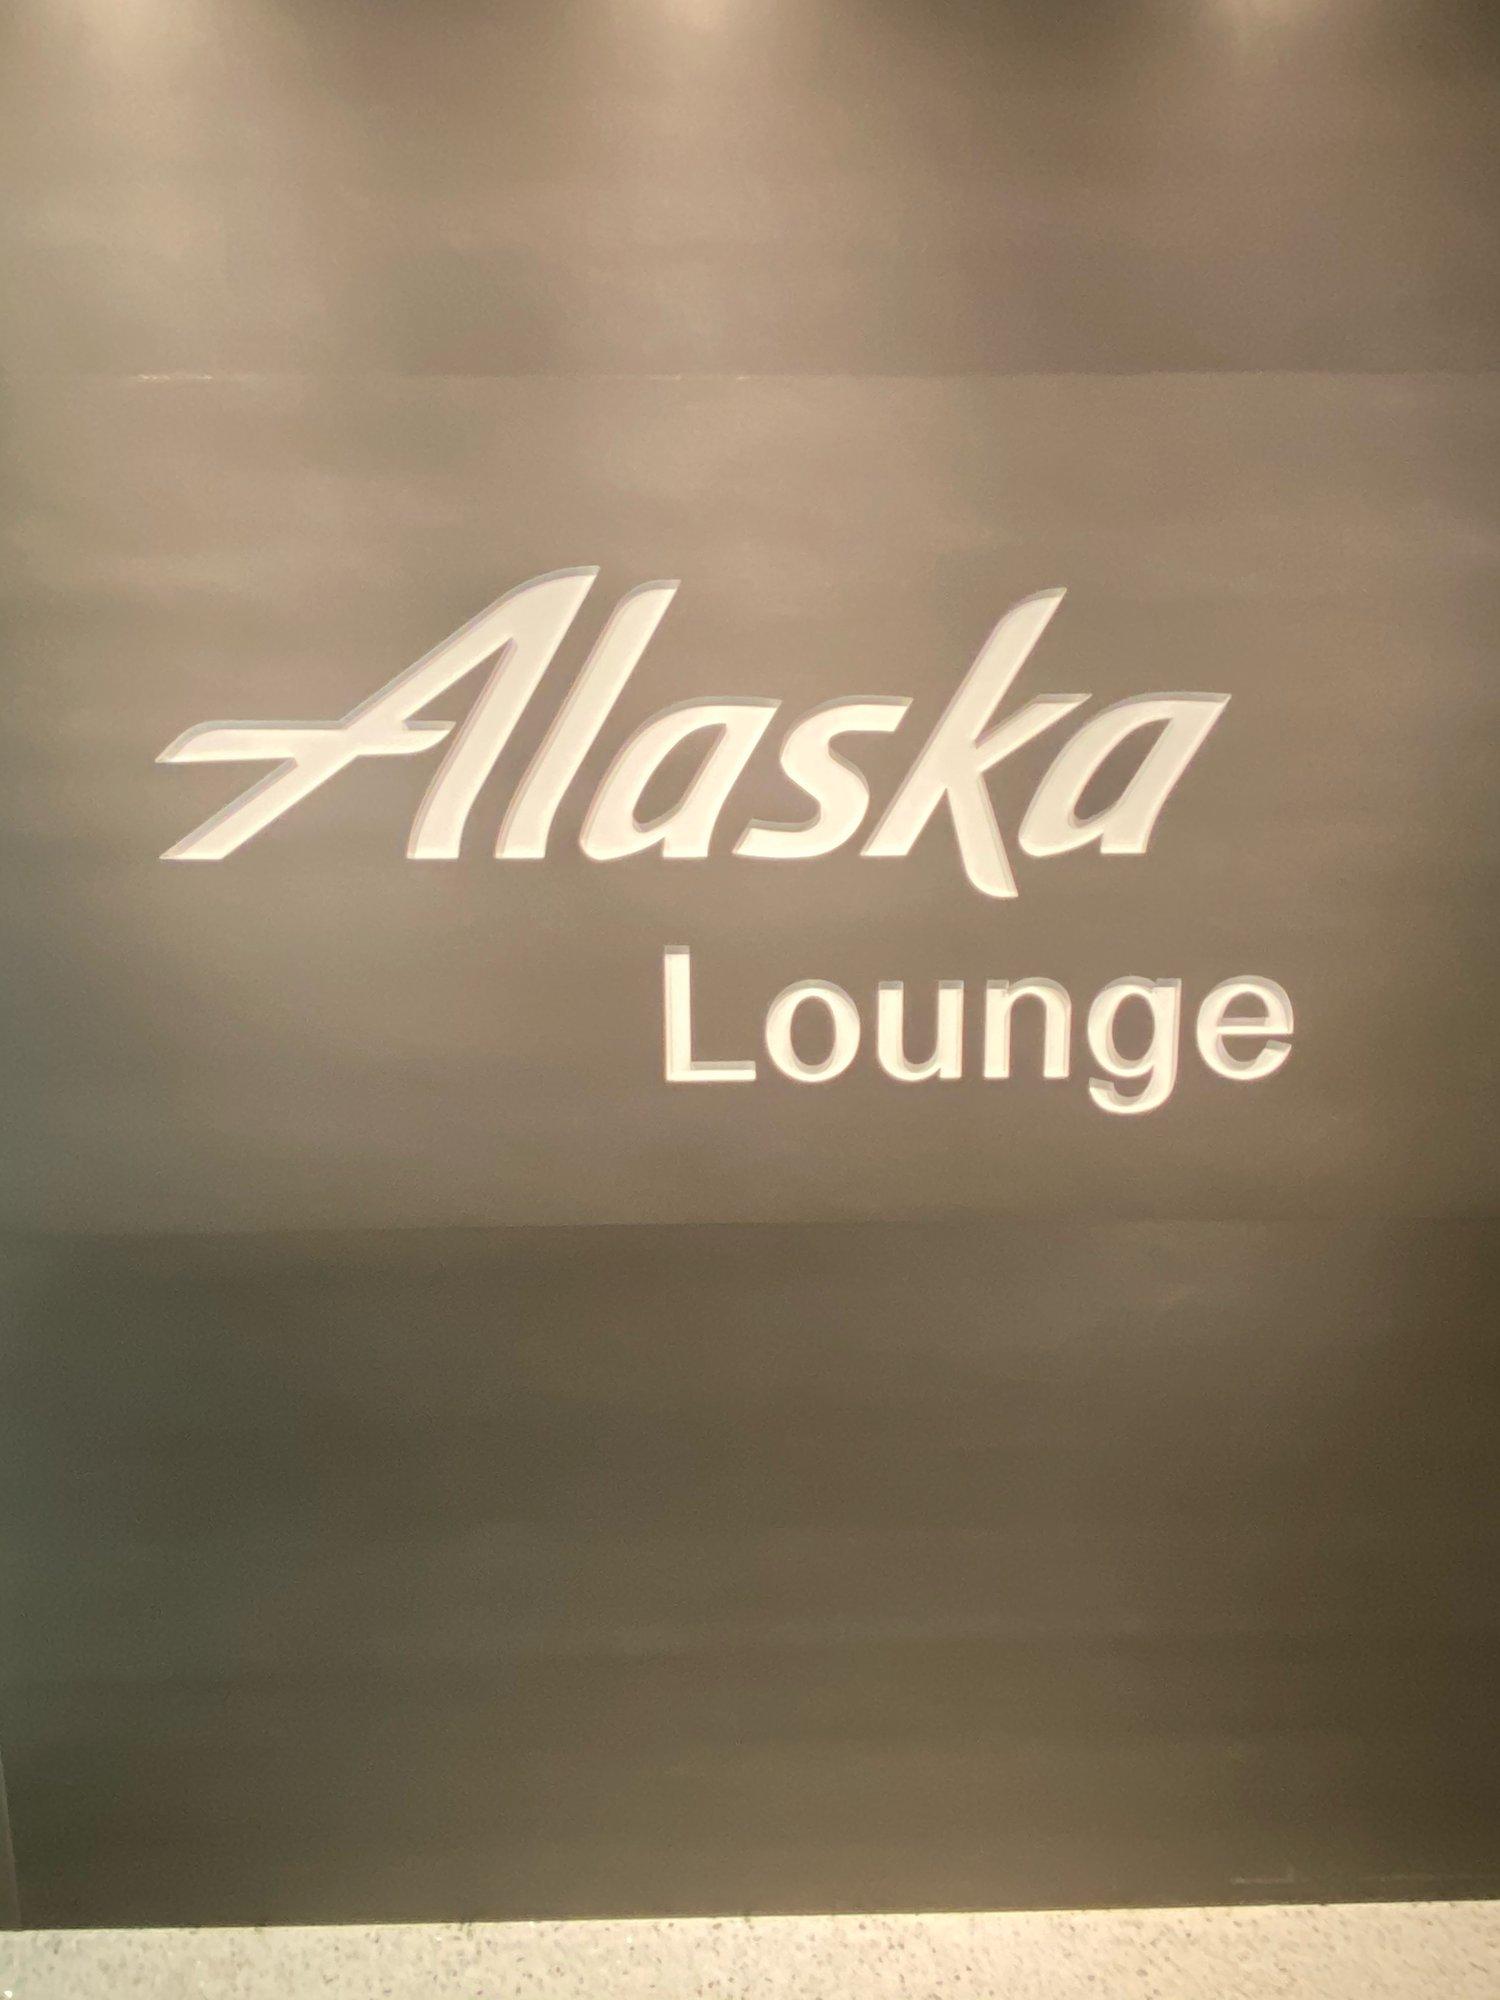 Alaska Airlines Alaska Lounge image 3 of 12